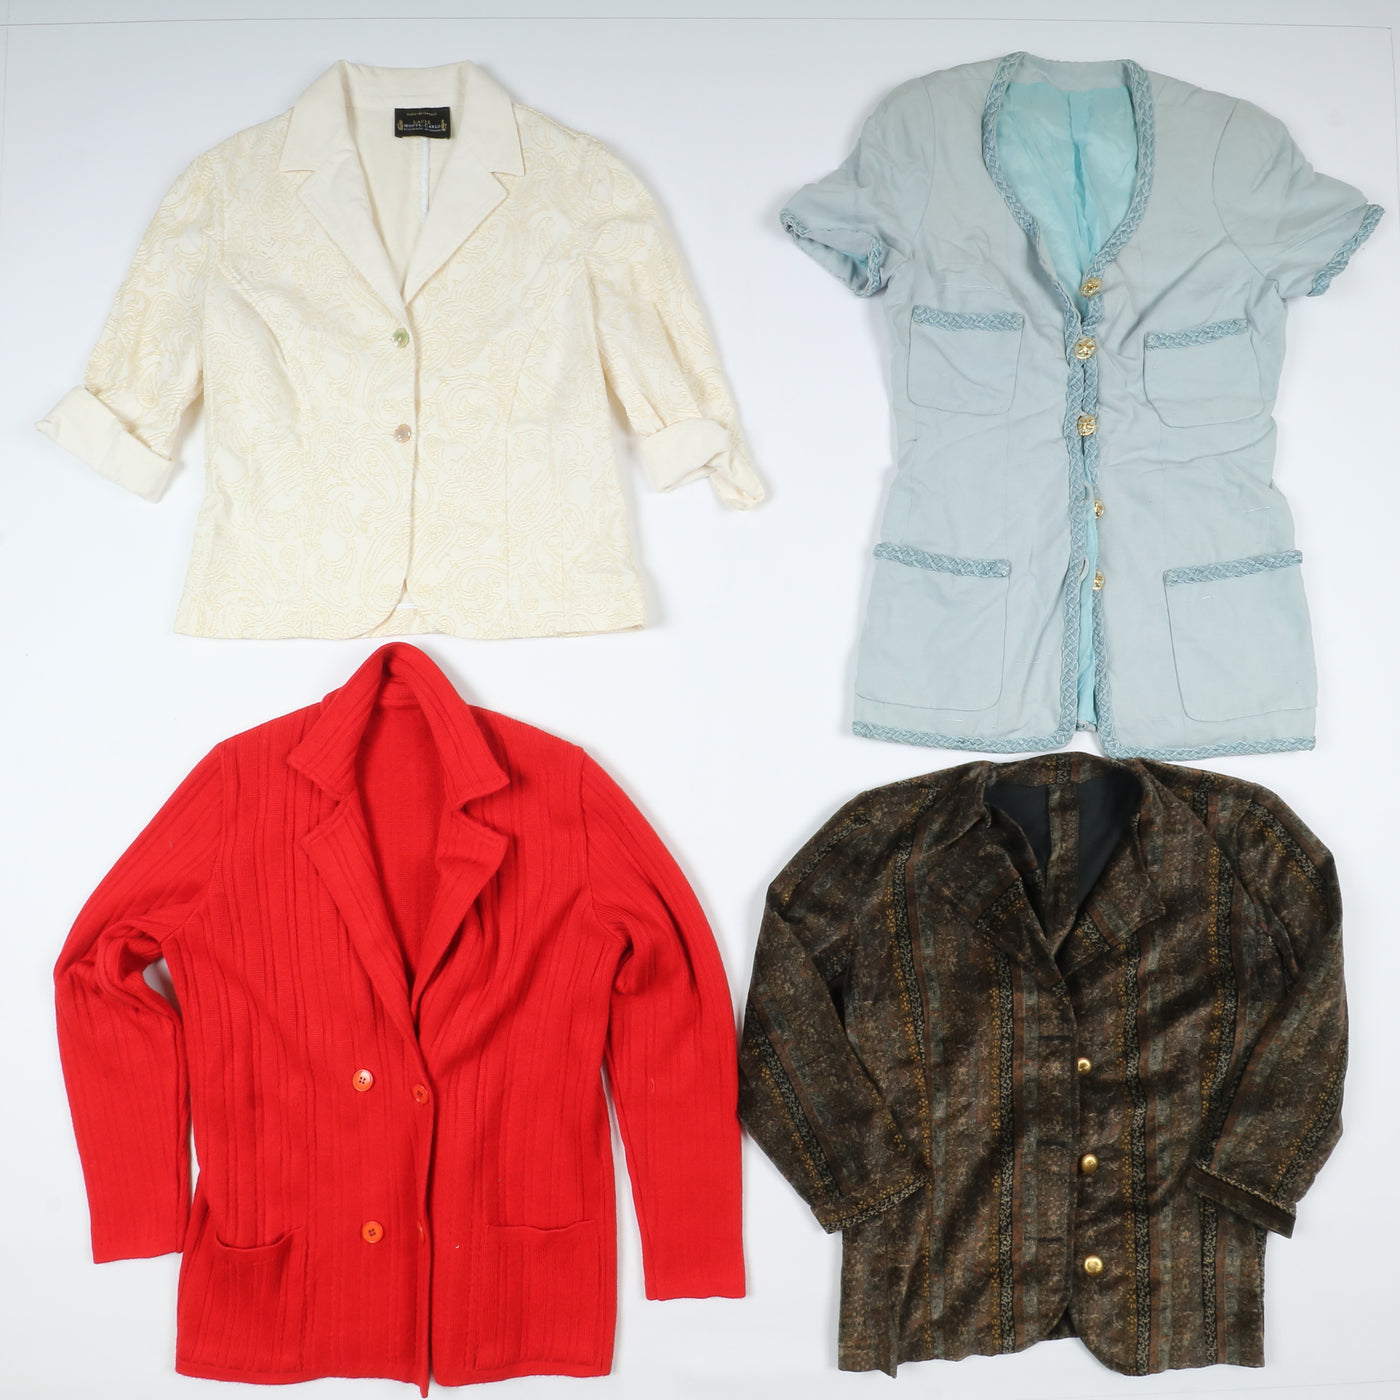 Cappotti e giacche vintage invernali da donna stock da 27pz